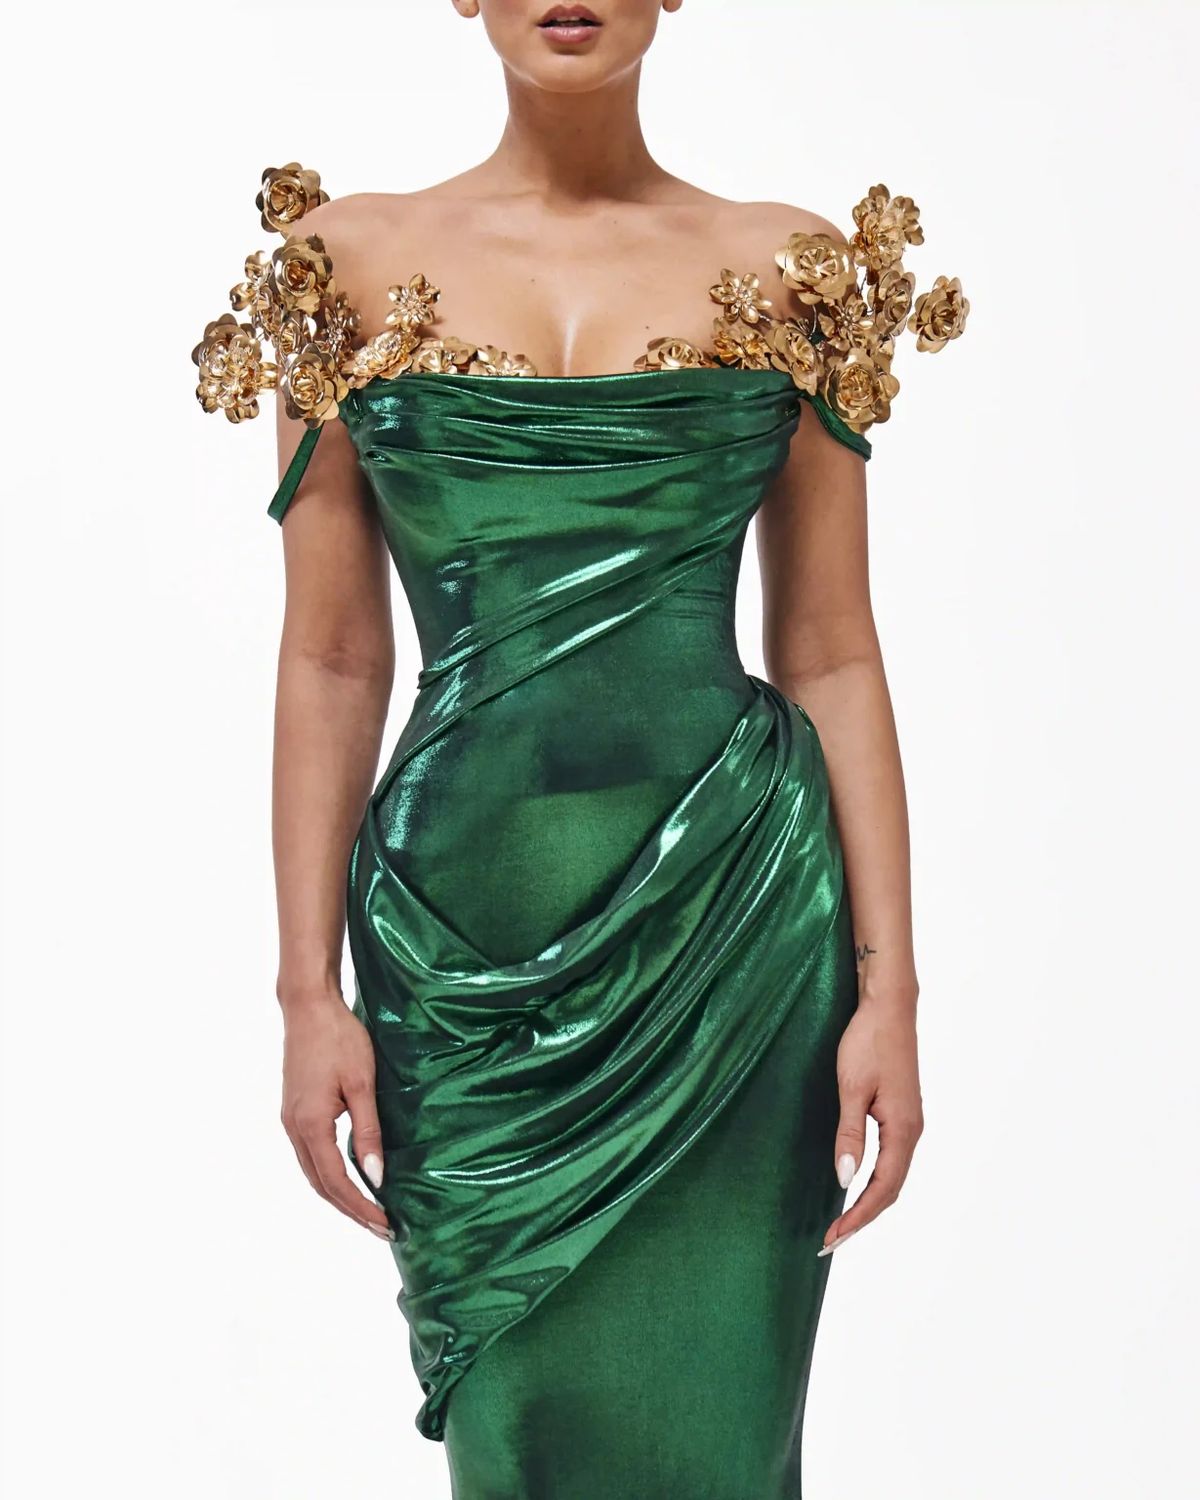 Style metallic-majesty-24-26 Valdrin Sahiti Size M Pageant Green Mermaid Dress on Queenly